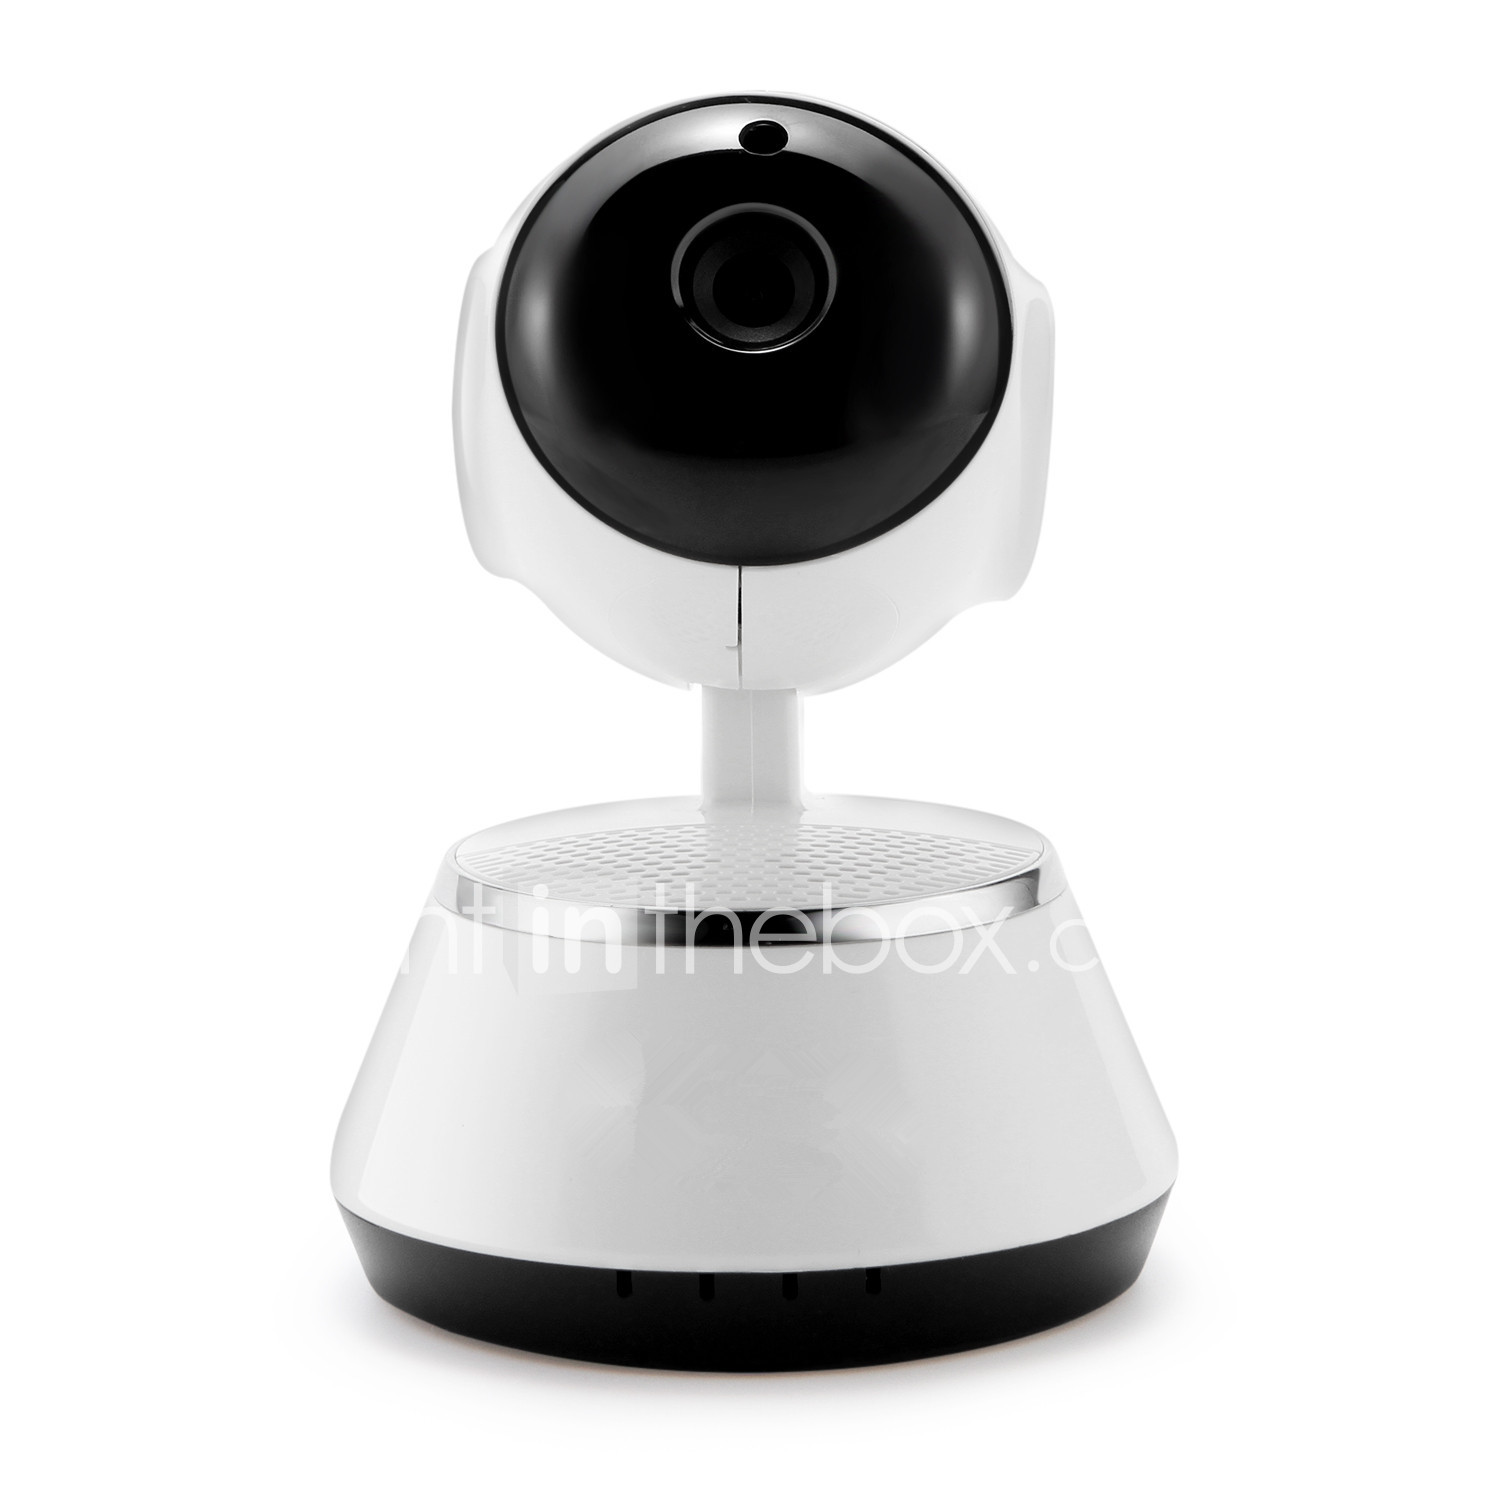 Ouku 720p Hd Ip Camera Home Security Smart Wifi Webcam Night Images, Photos, Reviews